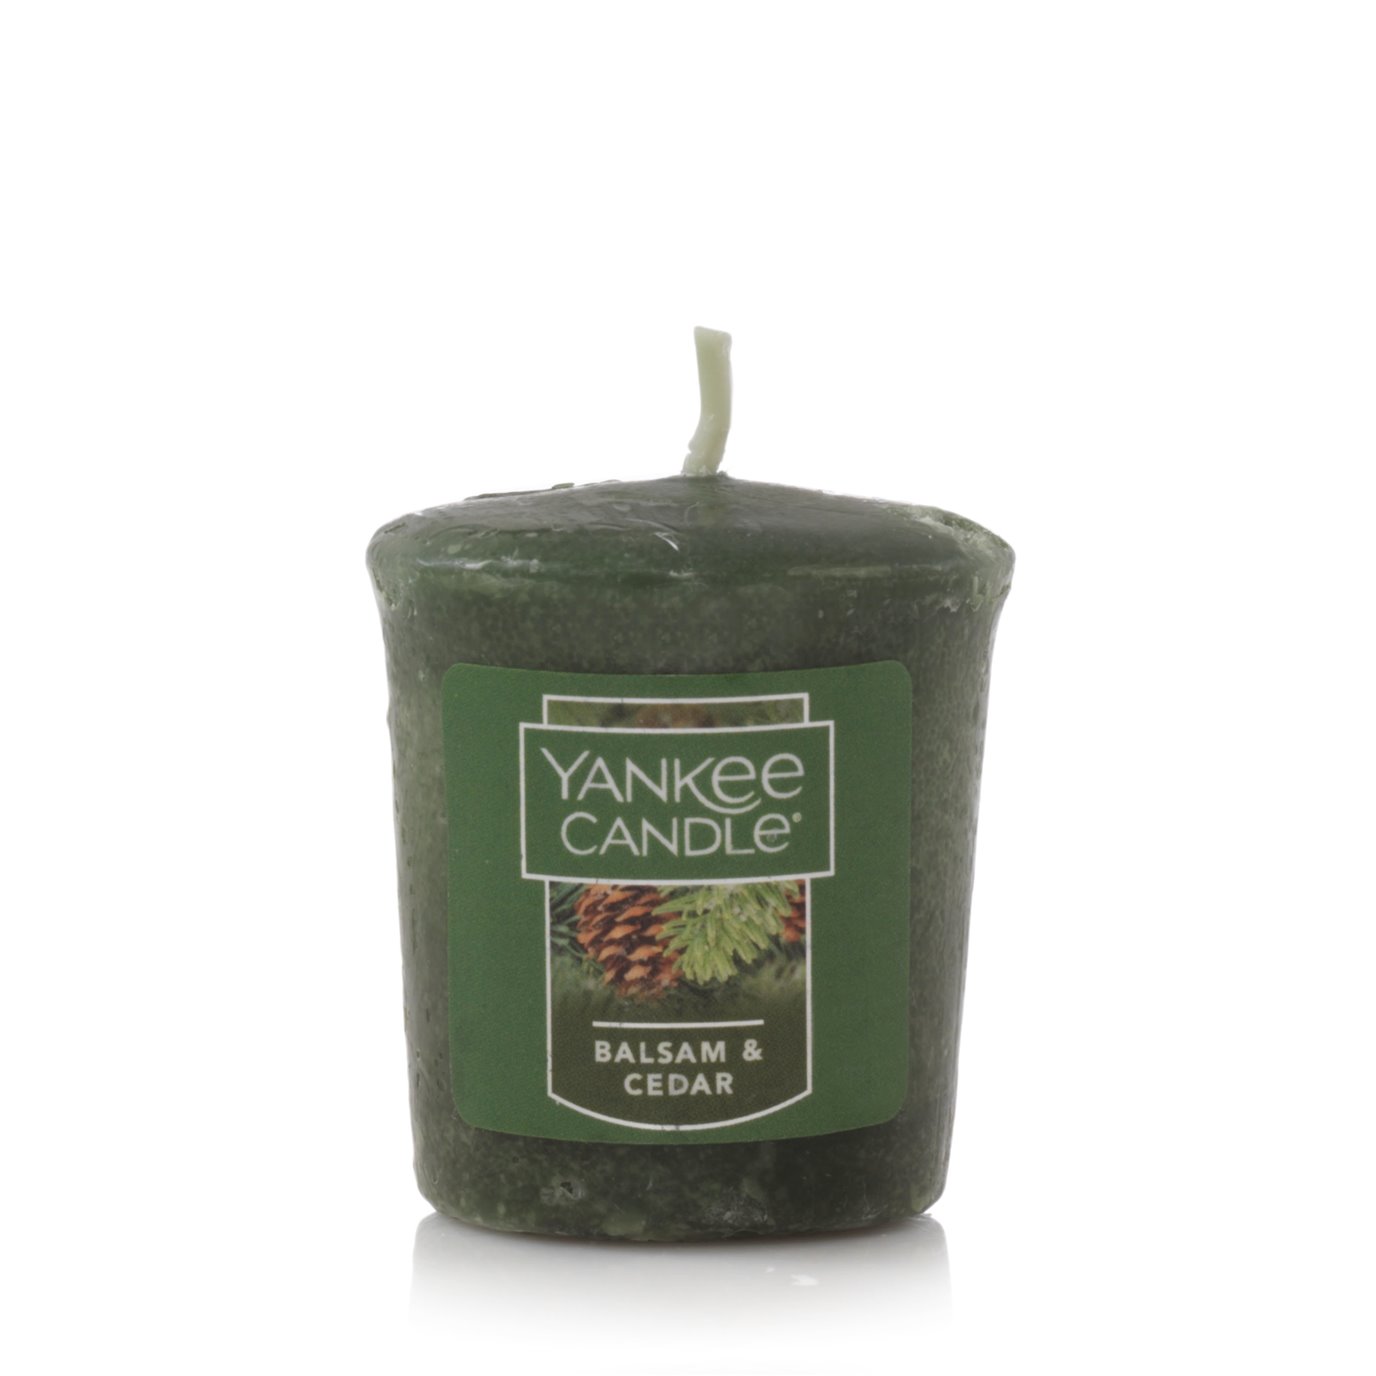 Yankee Candle Balsam & Cedar Sampler Votive